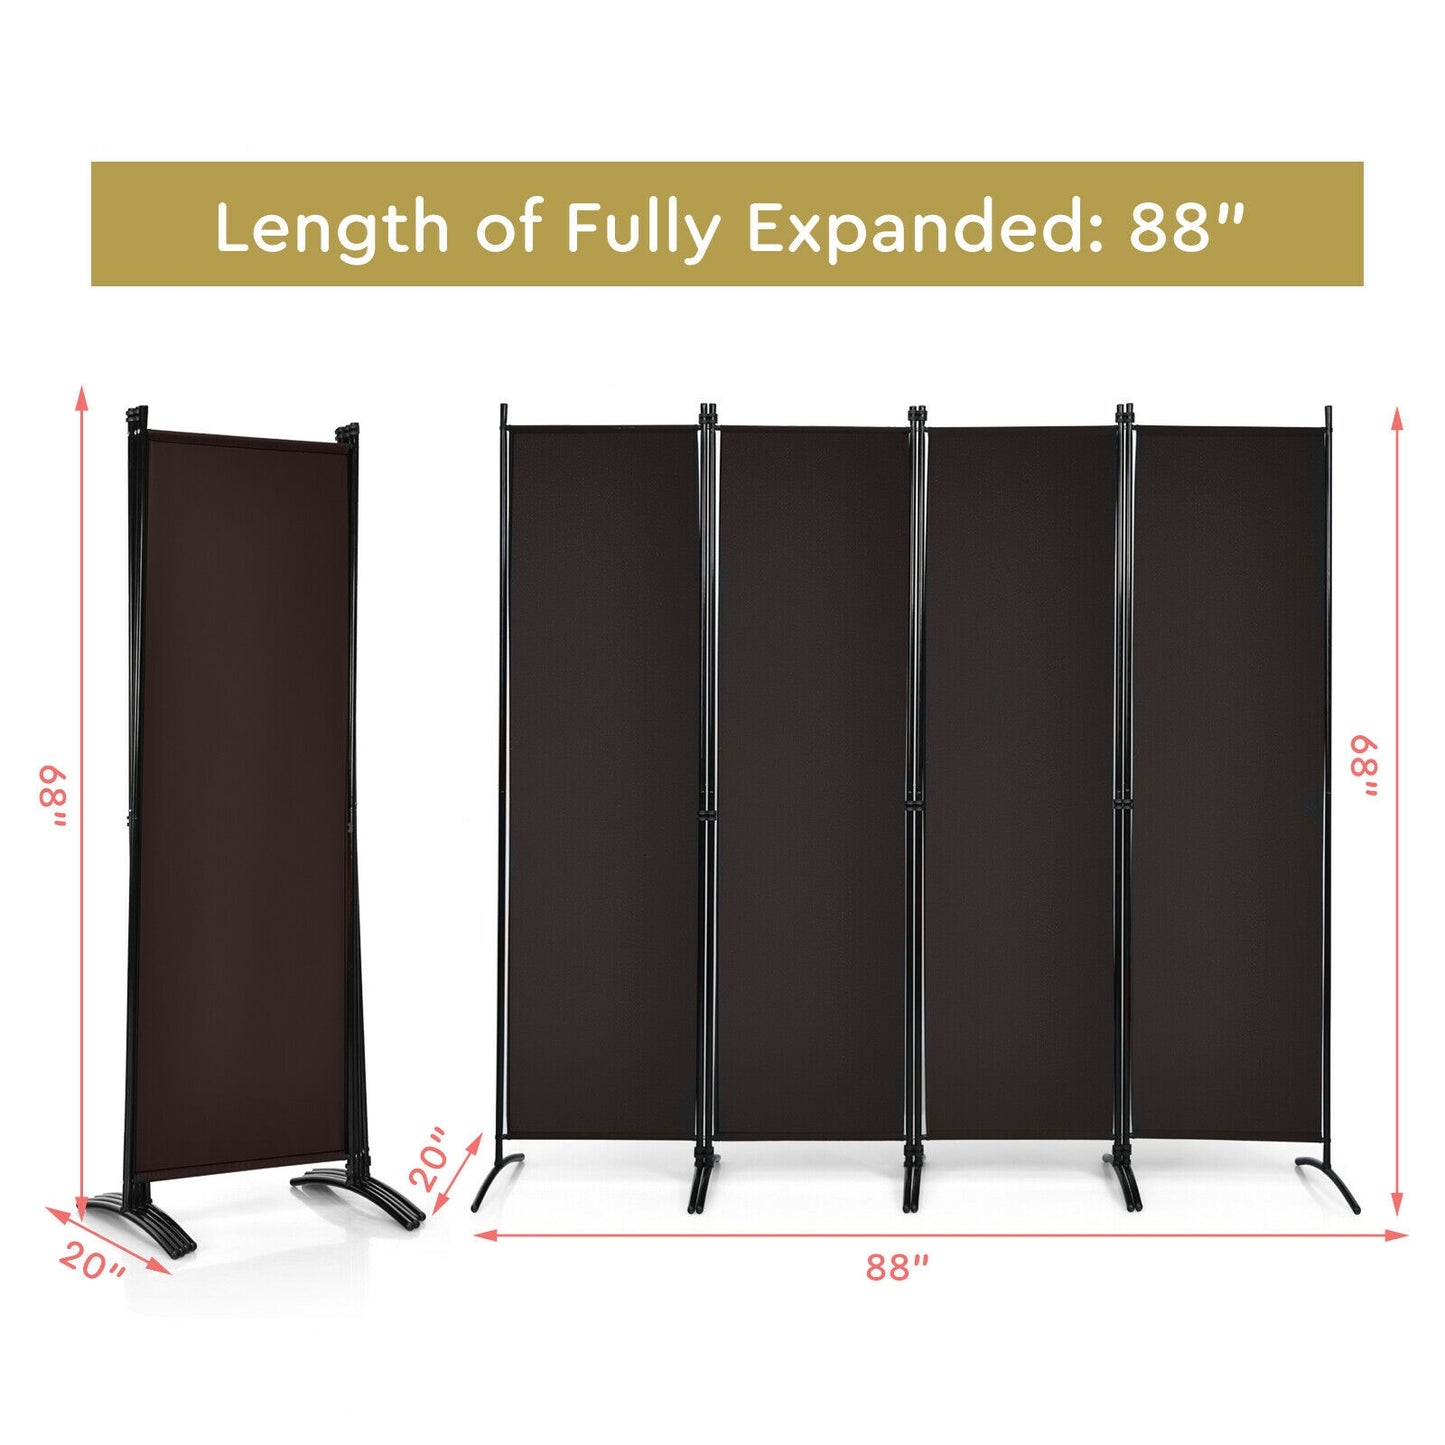 4-Panel  Room Divider with Steel Frame-Brown